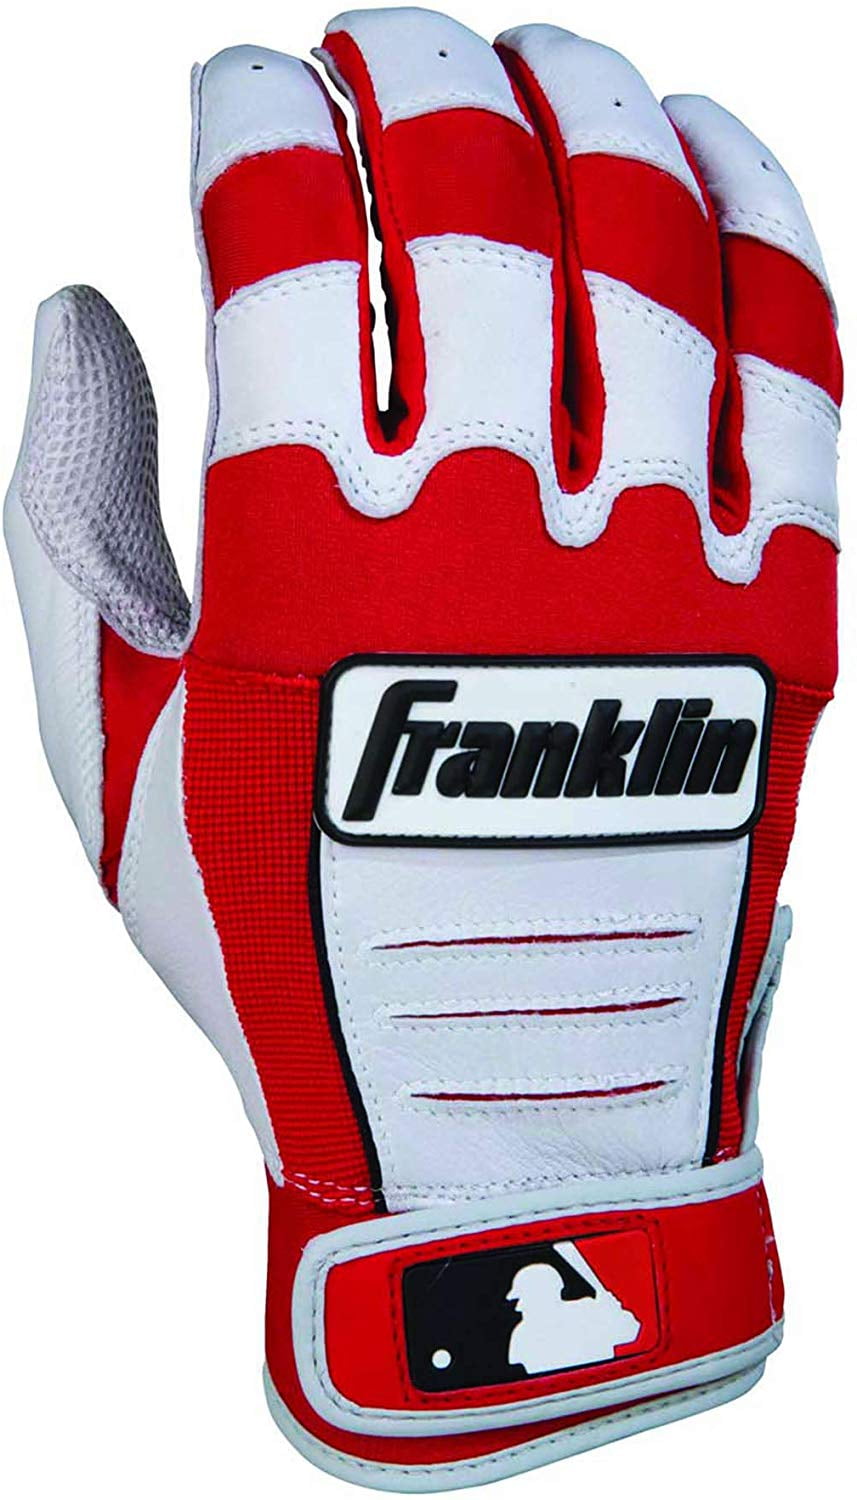 Supreme x Franklin CFX Pro Batting Gloves - Red - Medium